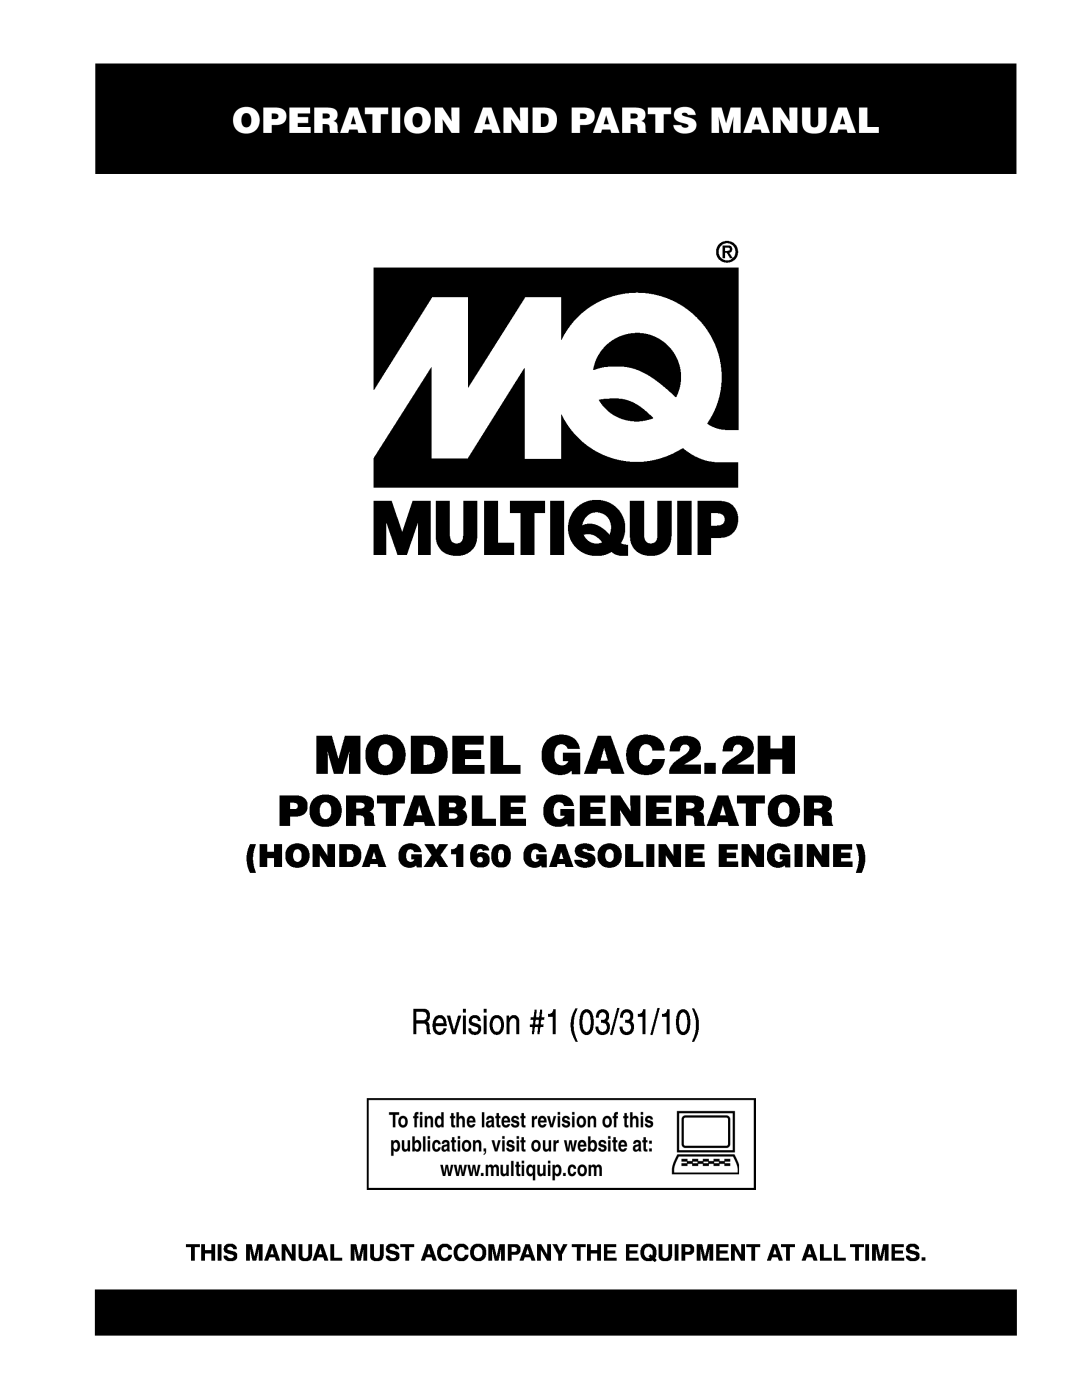 Multiquip GAC2.2H manual Operation and Parts Manual, MODEL gac2.2h, portable generator, Revision #1 03/31/10 